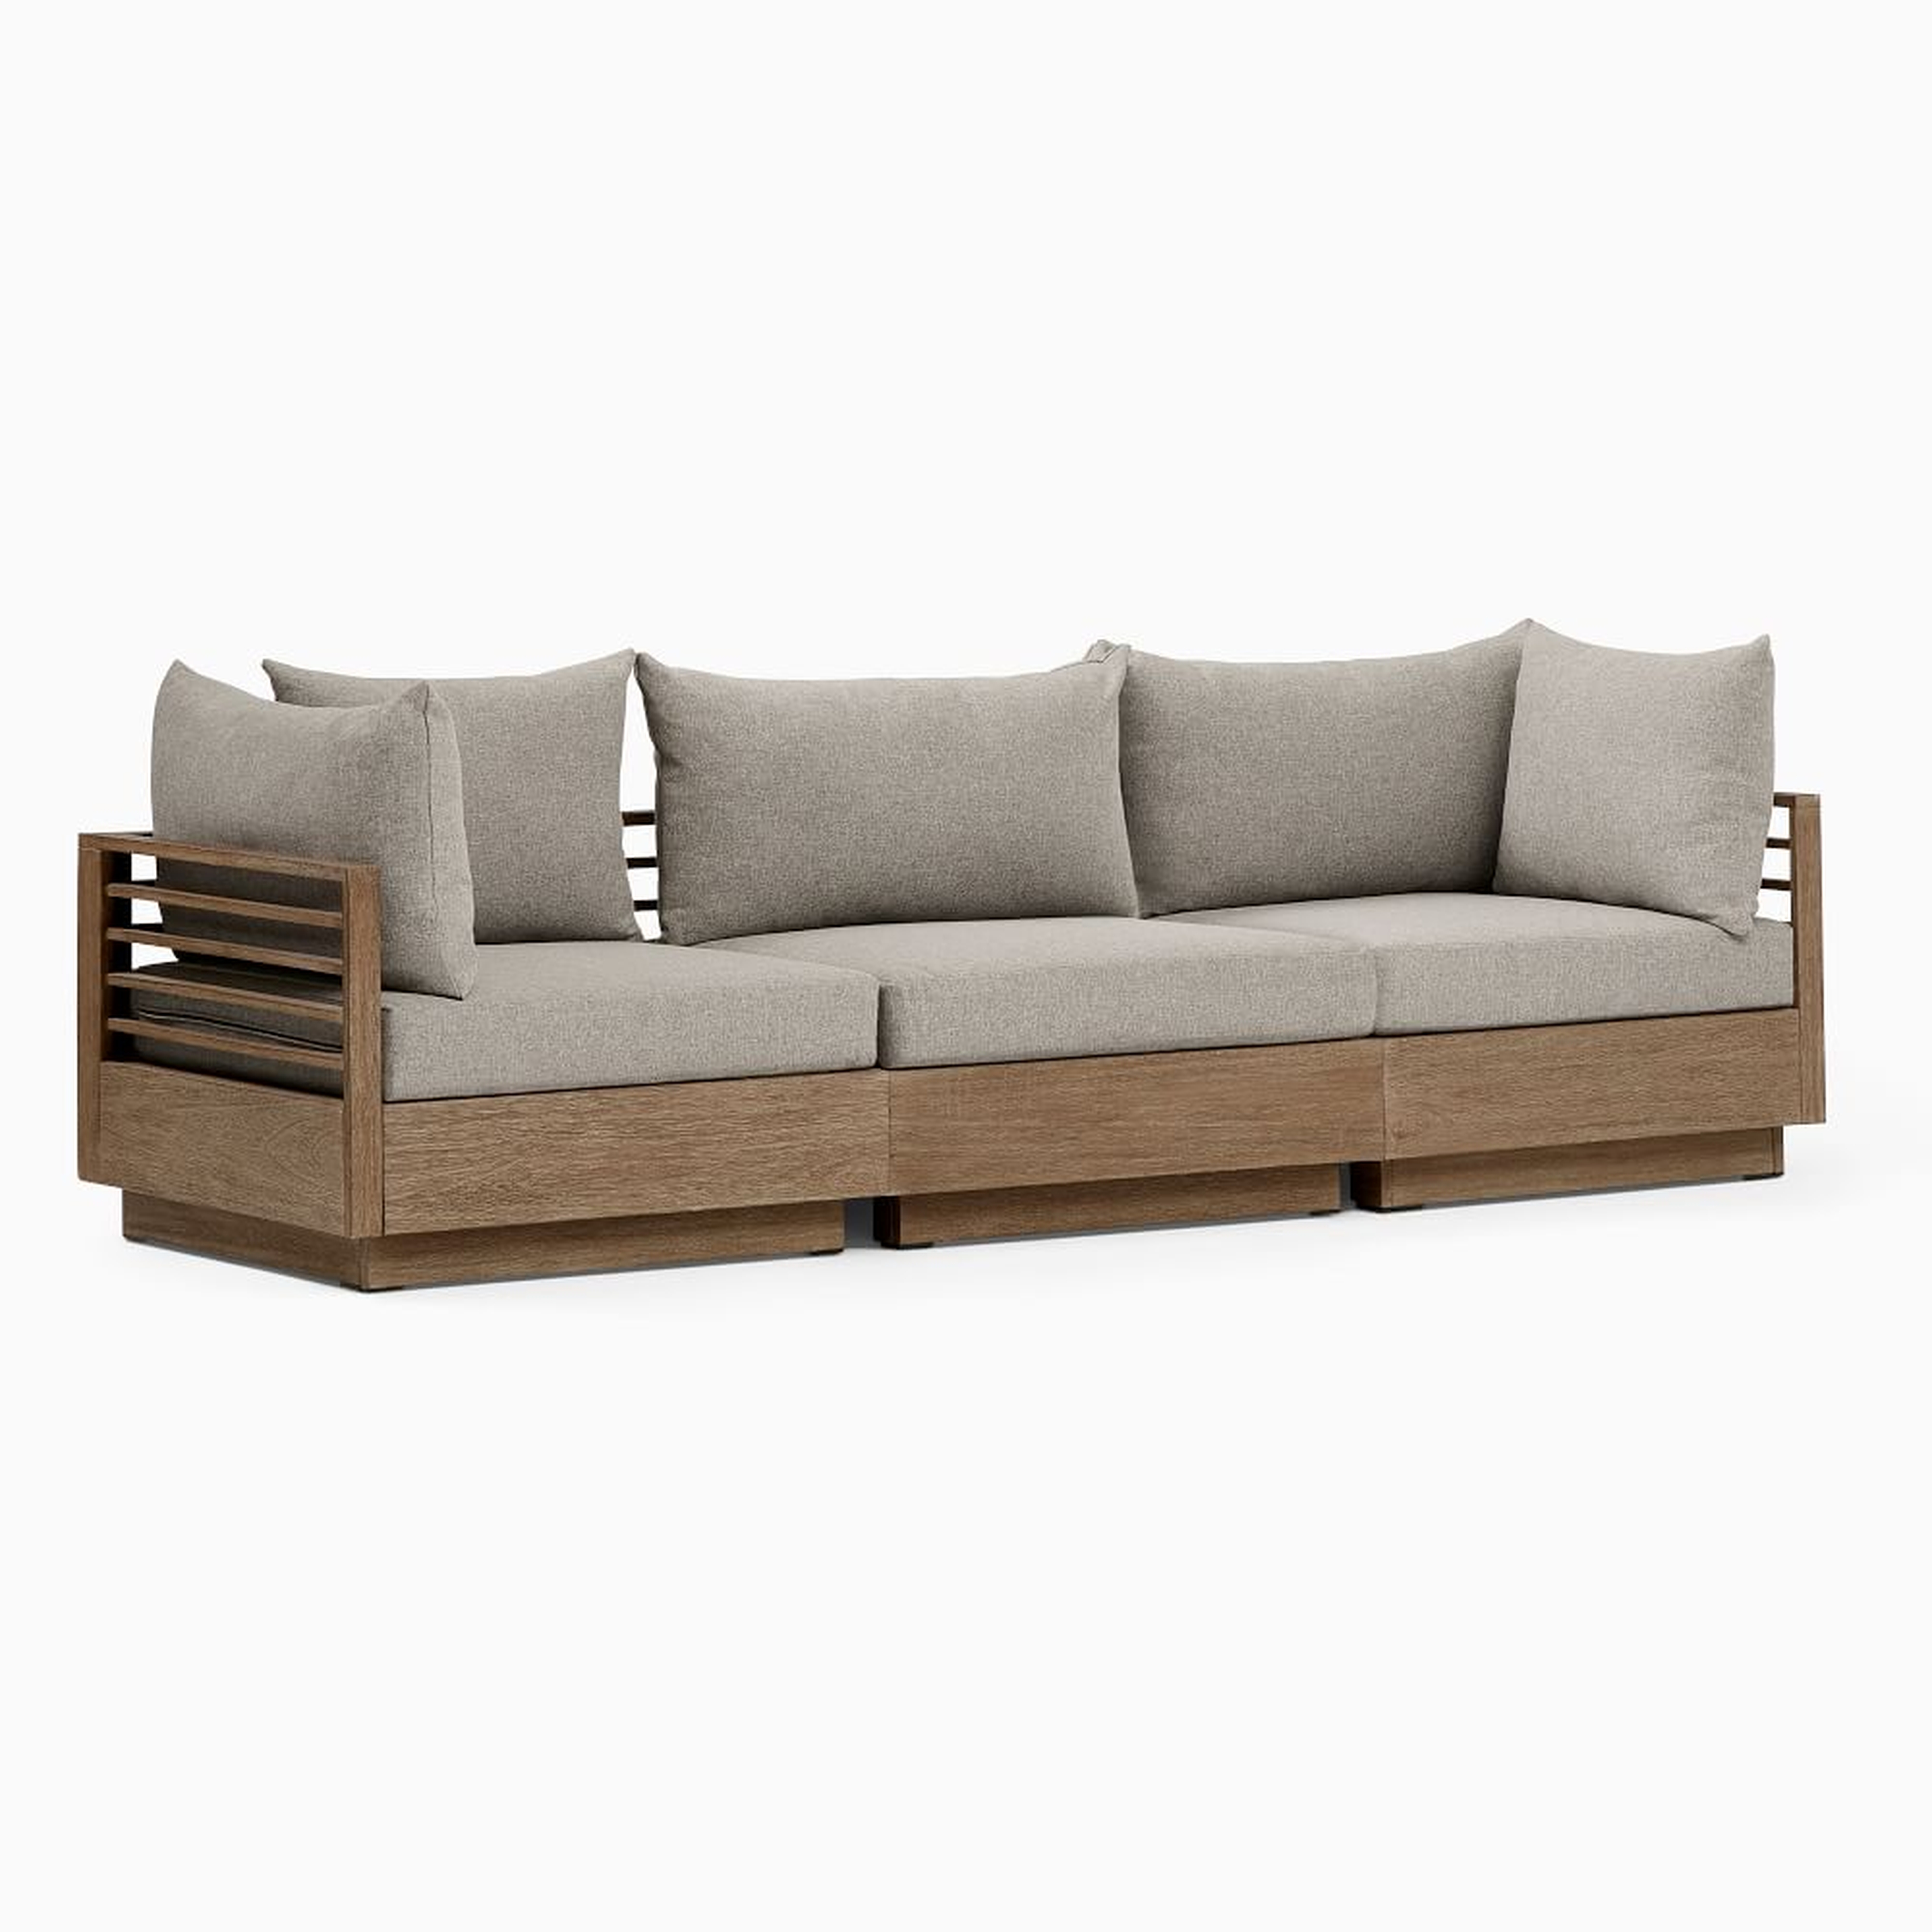 Santa Fe Slatted Outdoor 108 in 3-Piece Modular Sofa, Driftwood - West Elm